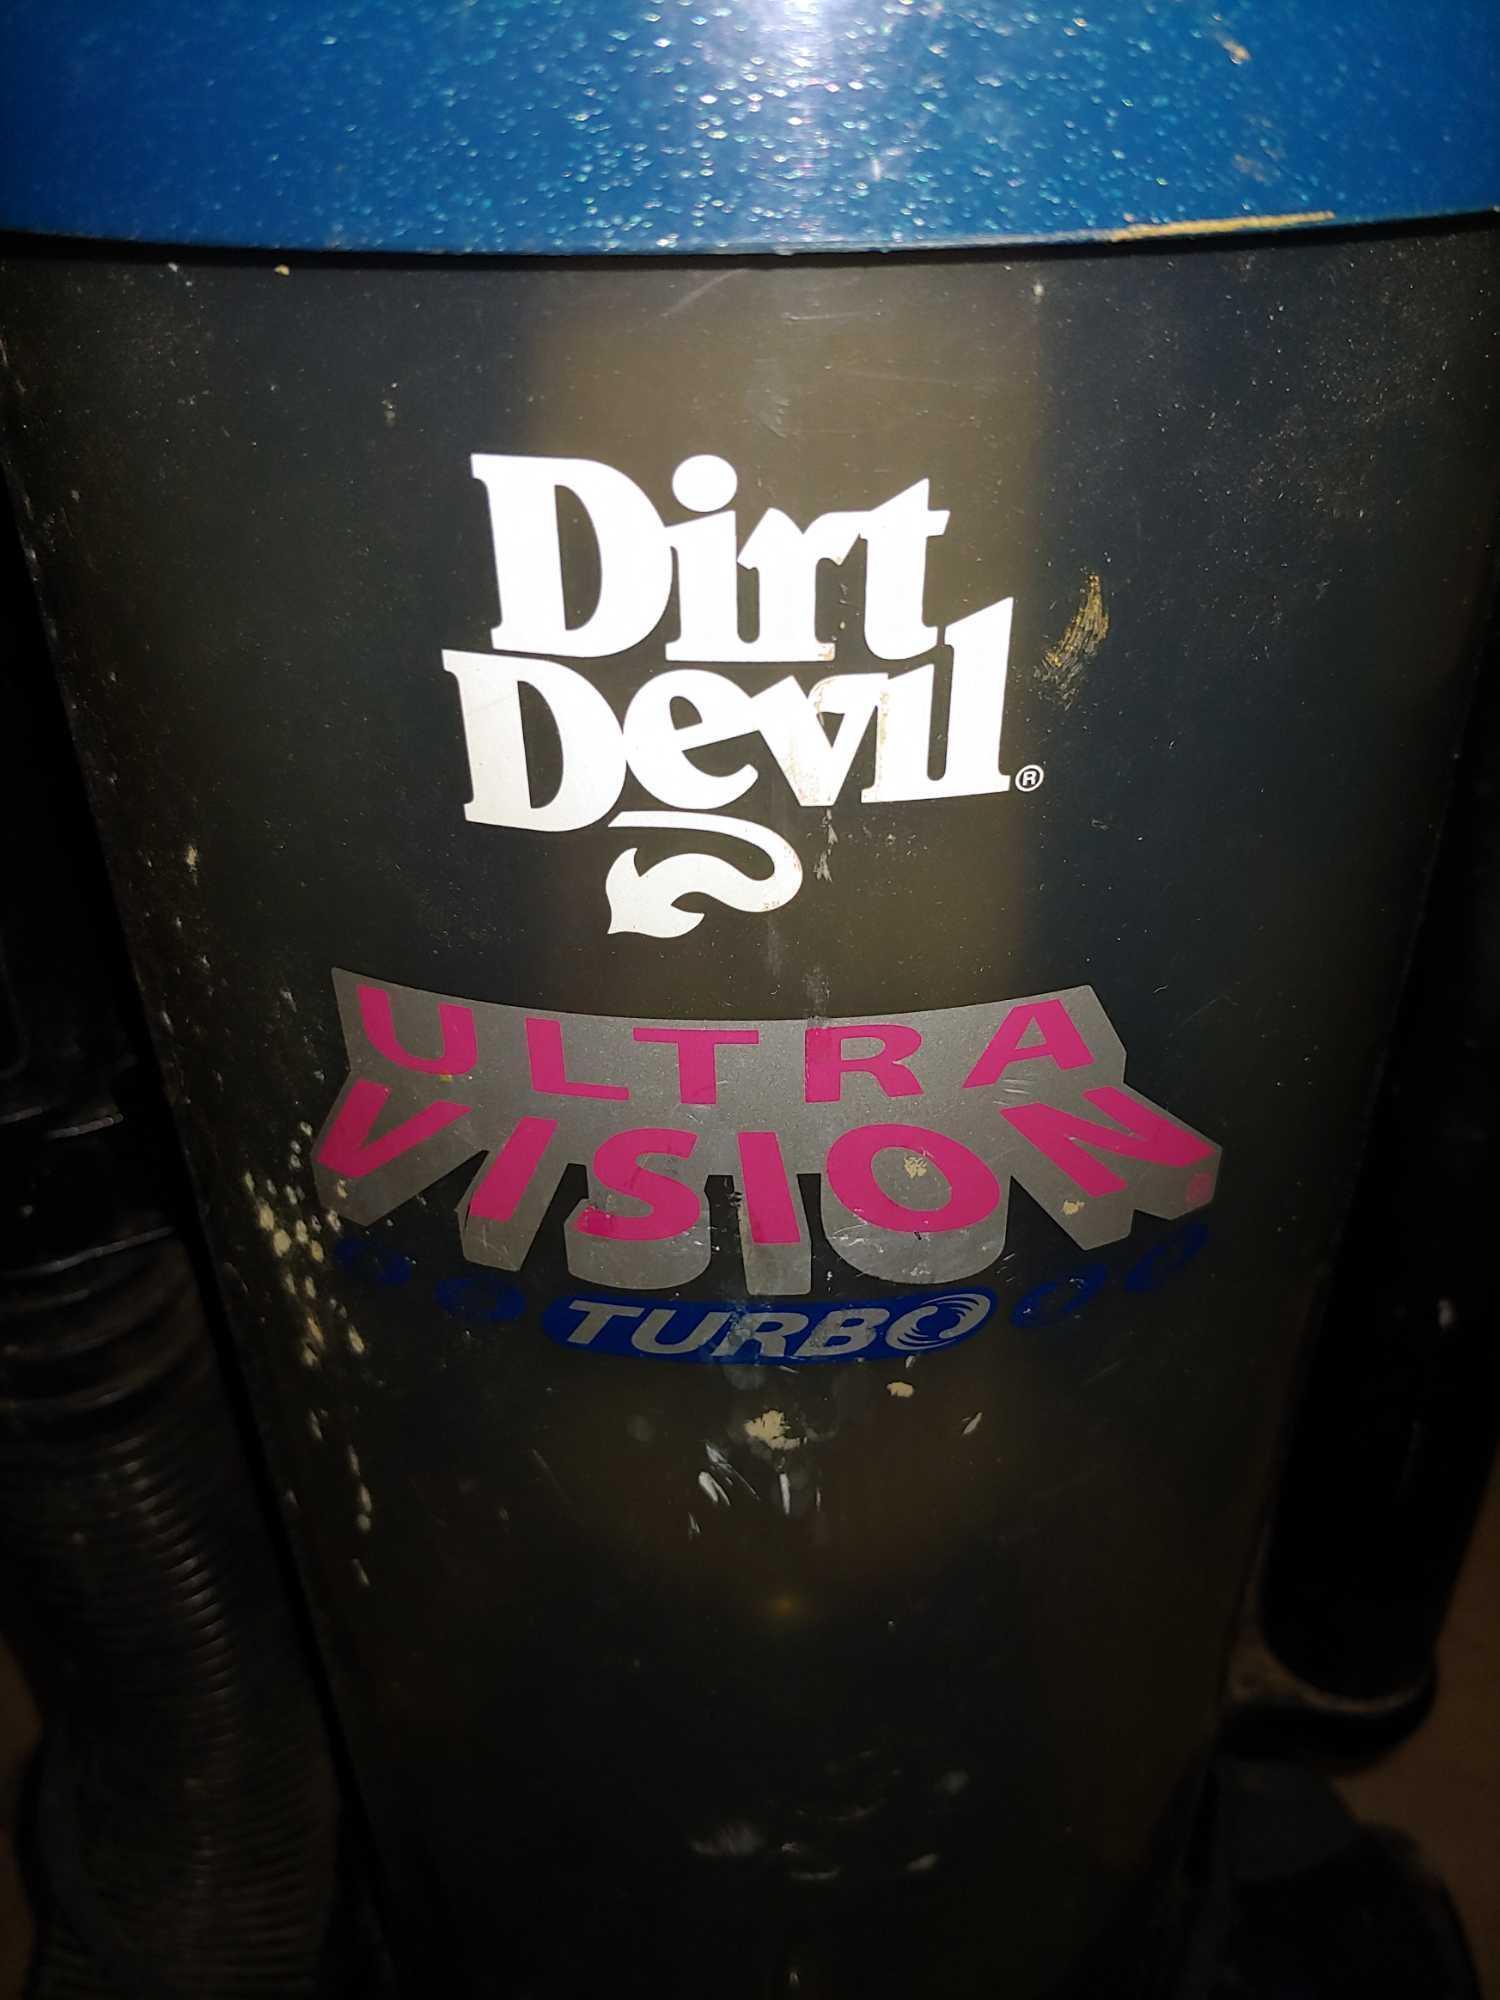 Dirt Devil Ultra Vision Turbo bagless vacuum, 12 amp with motorguard